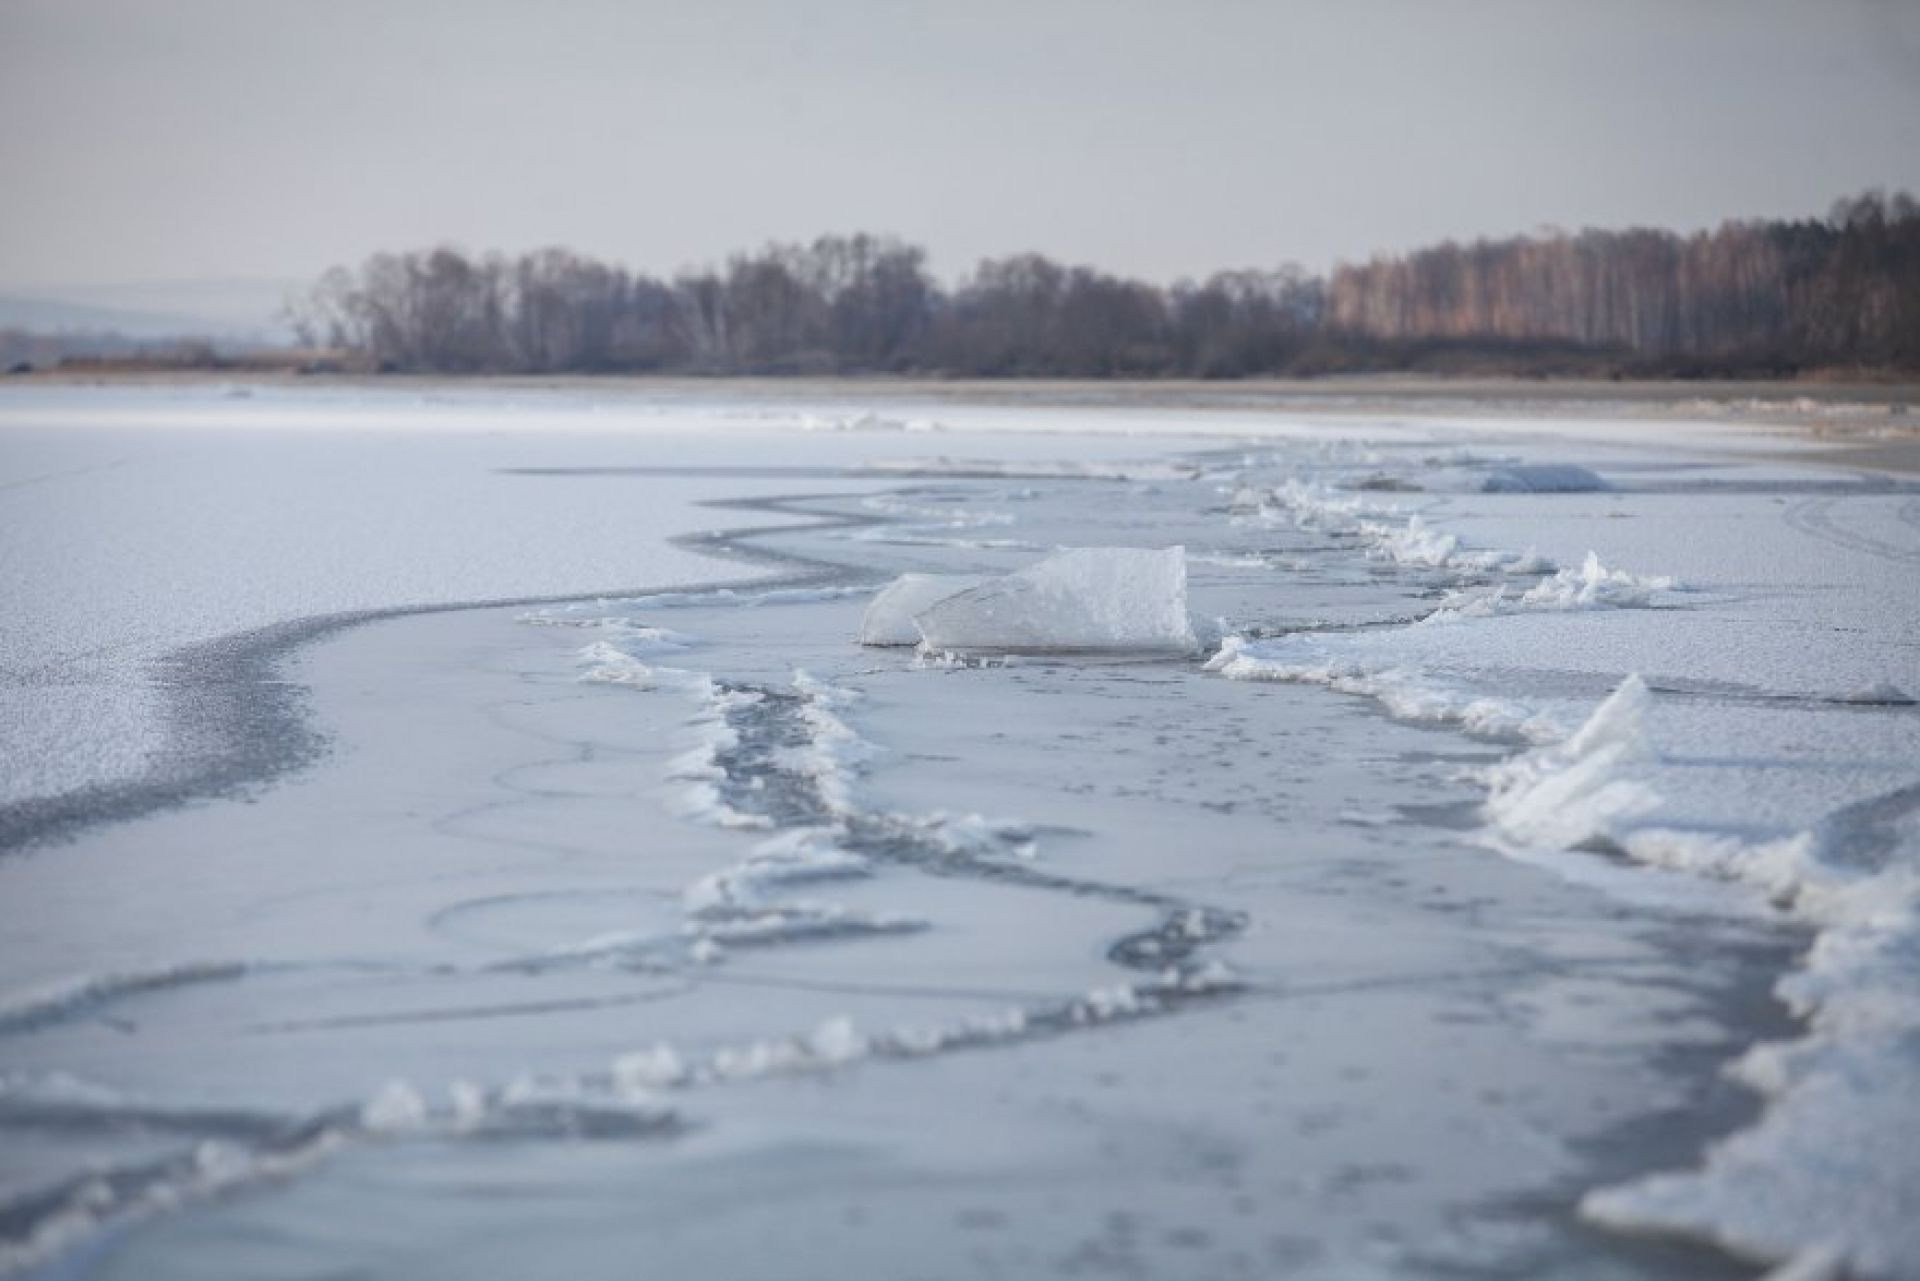 Вода в реке замерзла. Река Кама ледостав. Лед на реке. Замерзшая река. Река покрытая льдом.